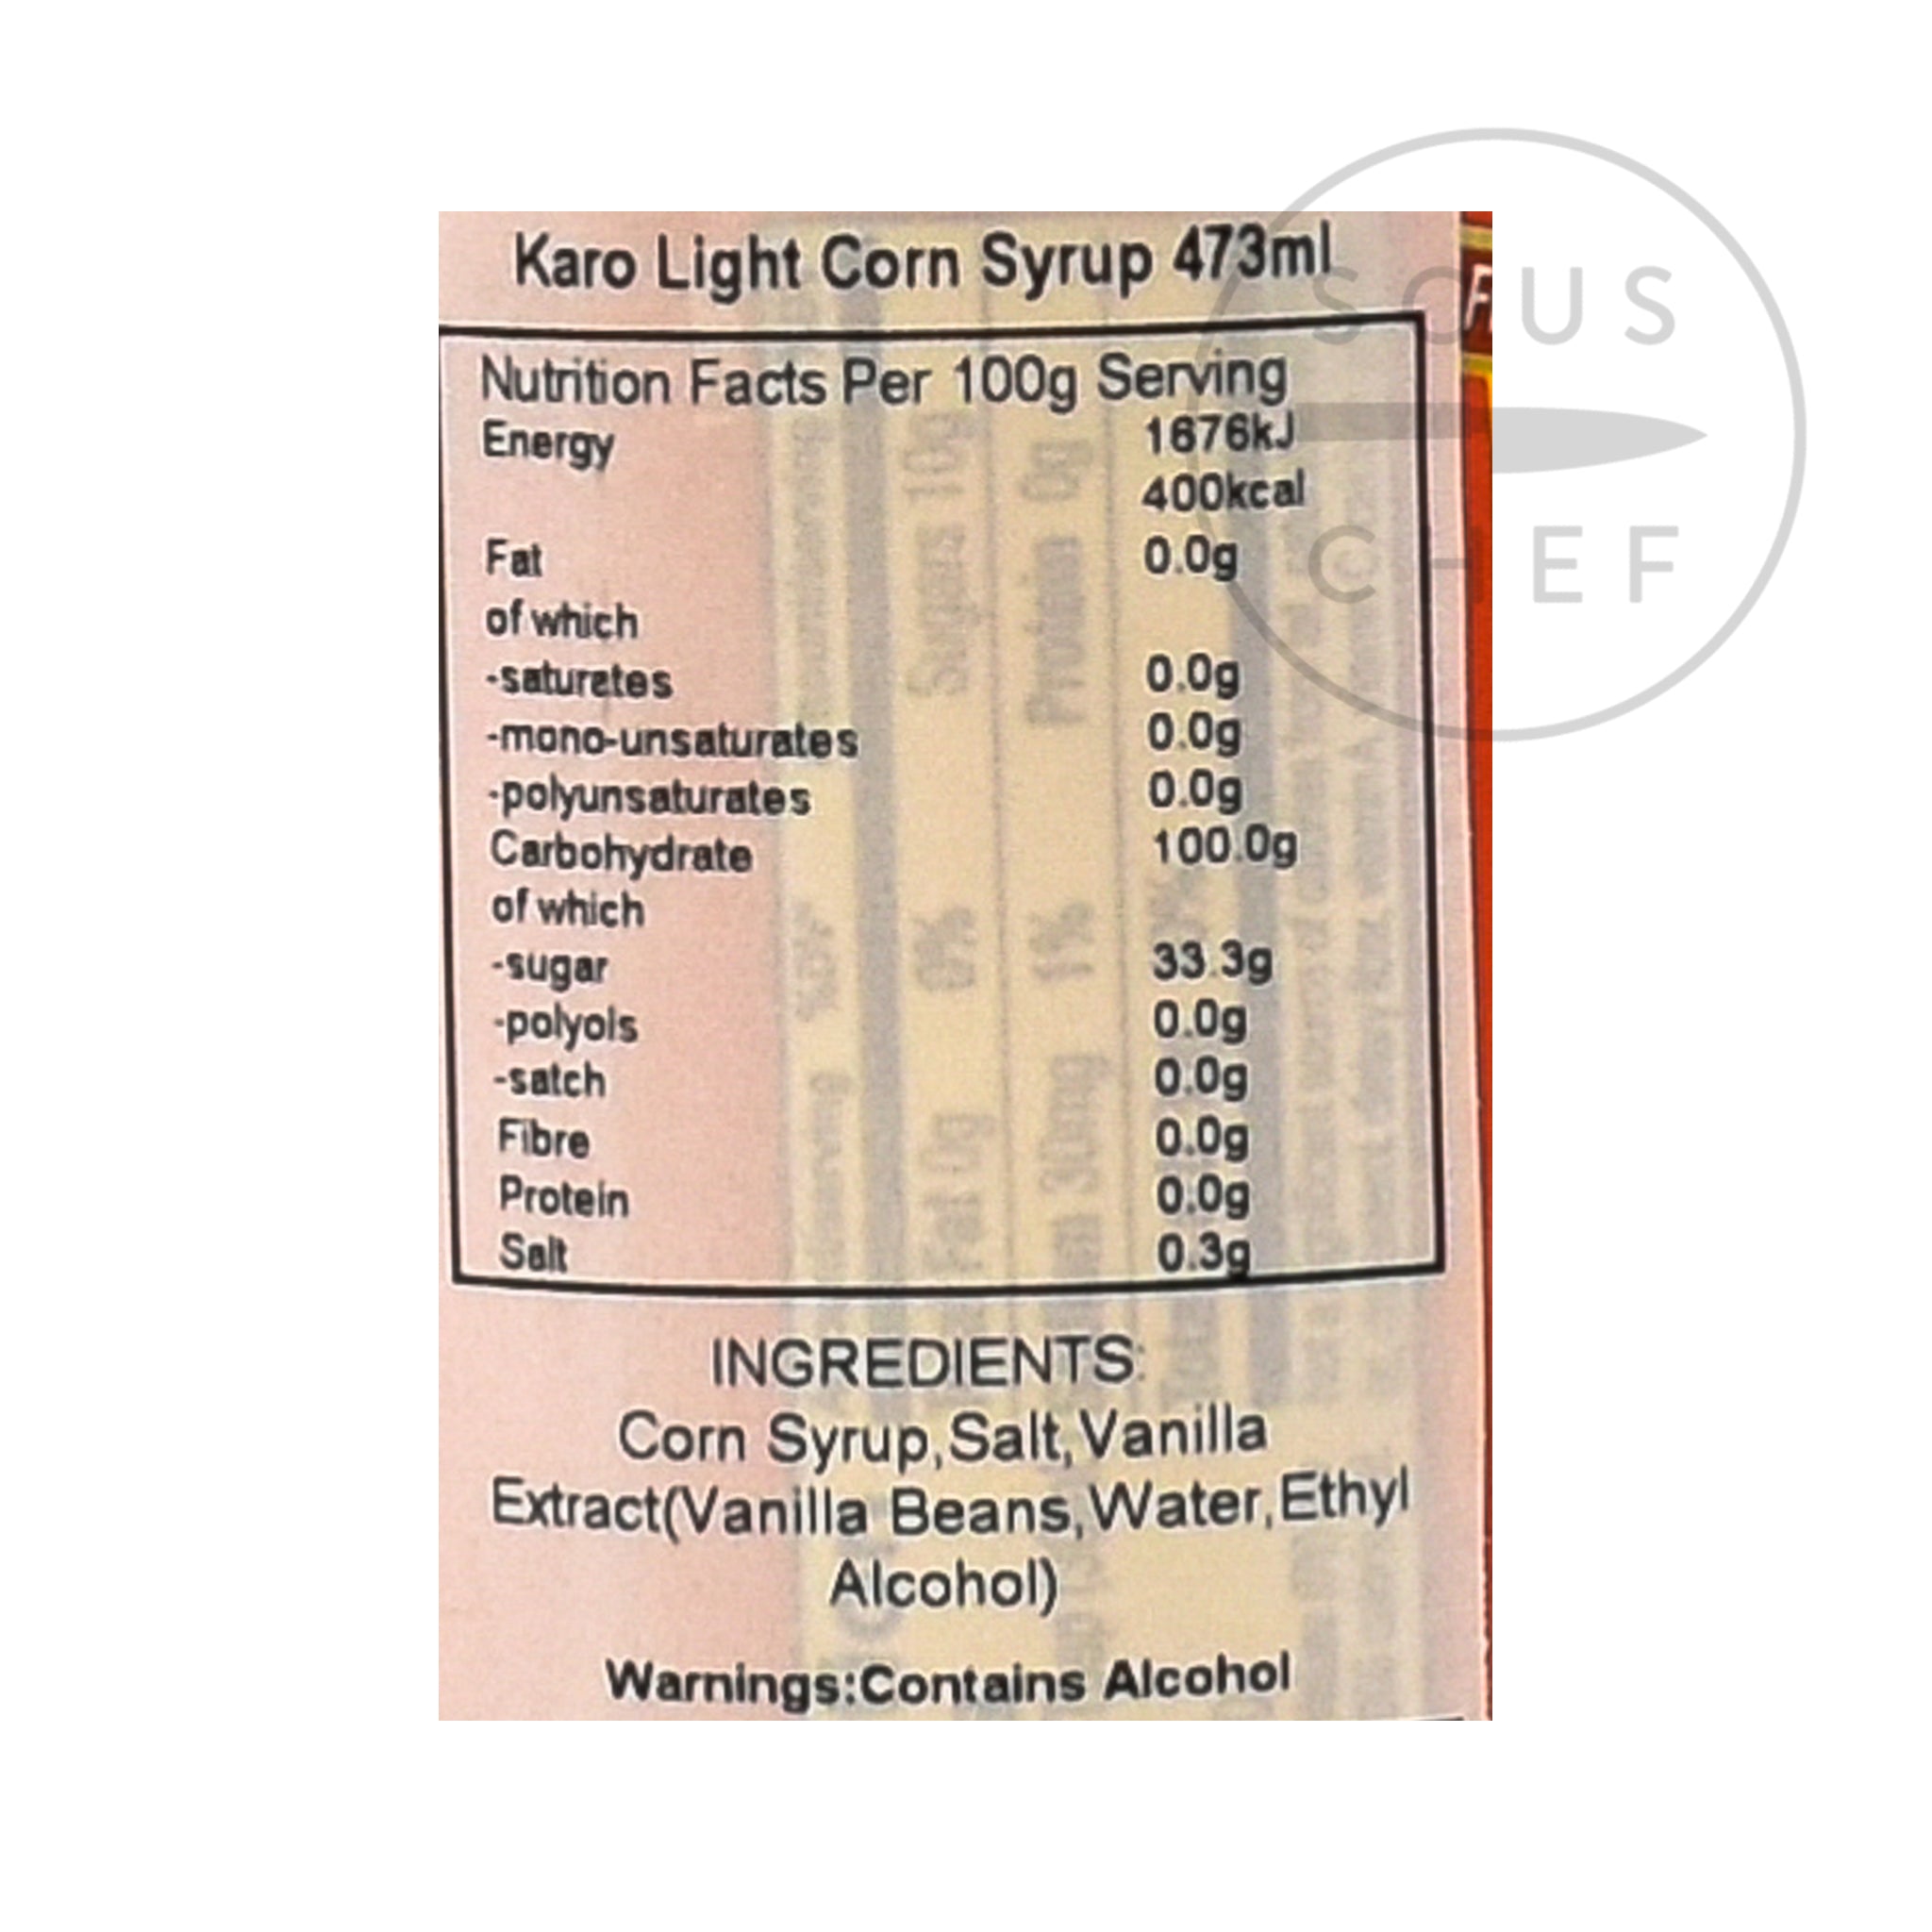 Karo Light Corn Syrup - Red 473ml  nutritional information ingredients